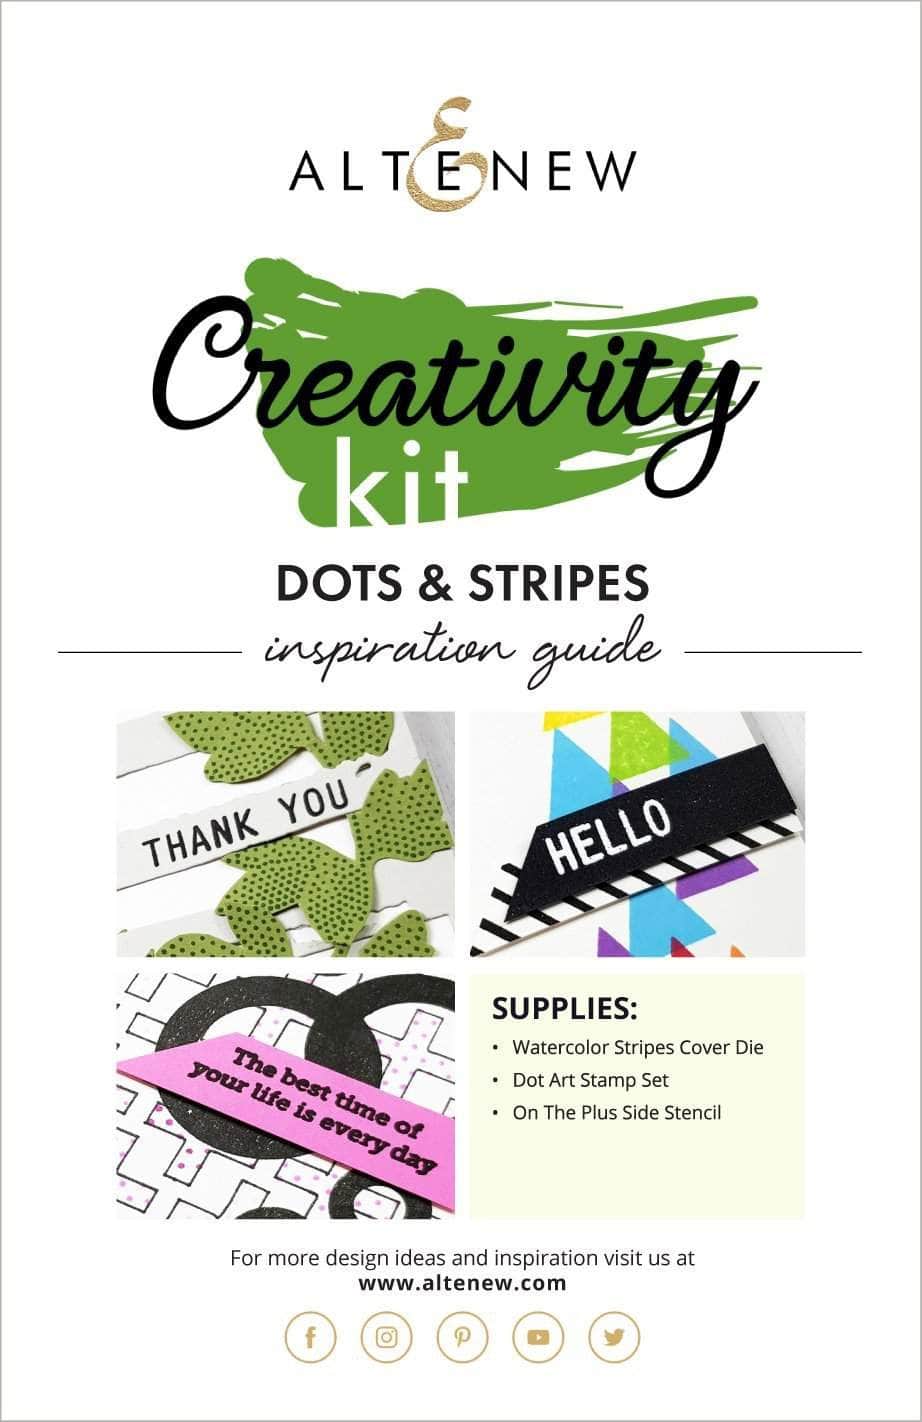 Printed Media Dots & Stripes Creativity Kit Inspiration Guide